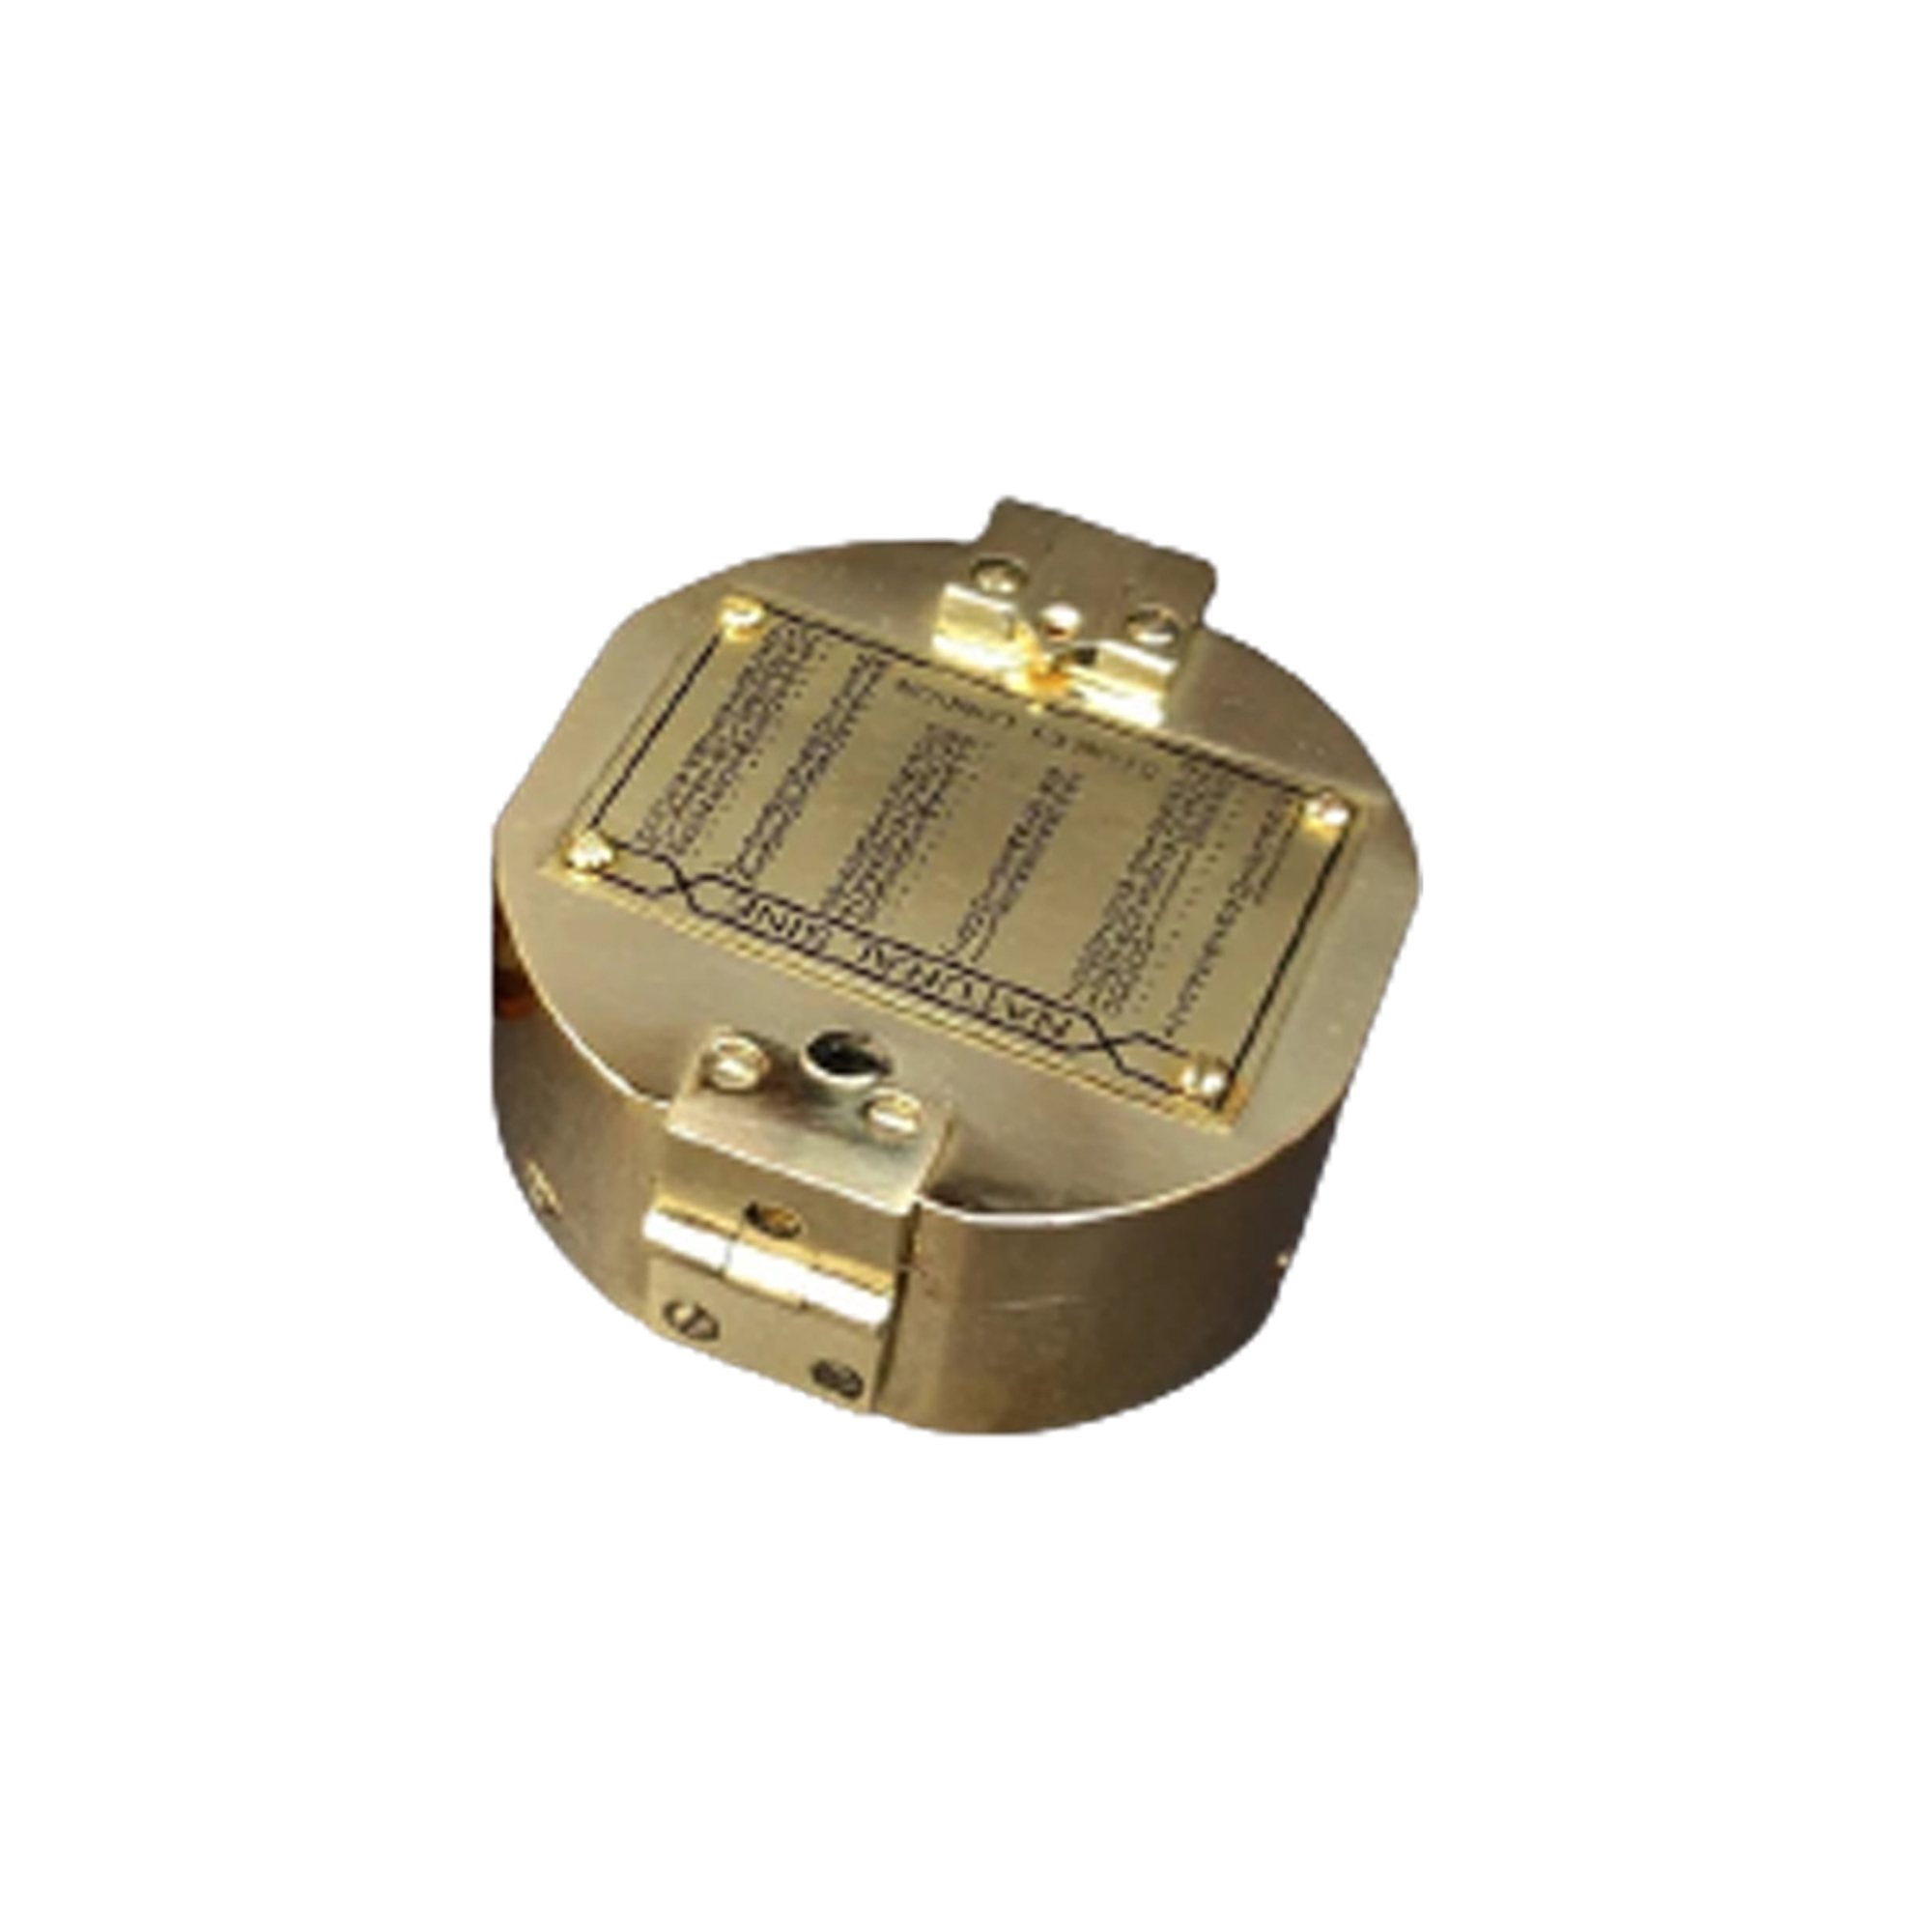 Nautical Brass Brunton Compass with wooden box